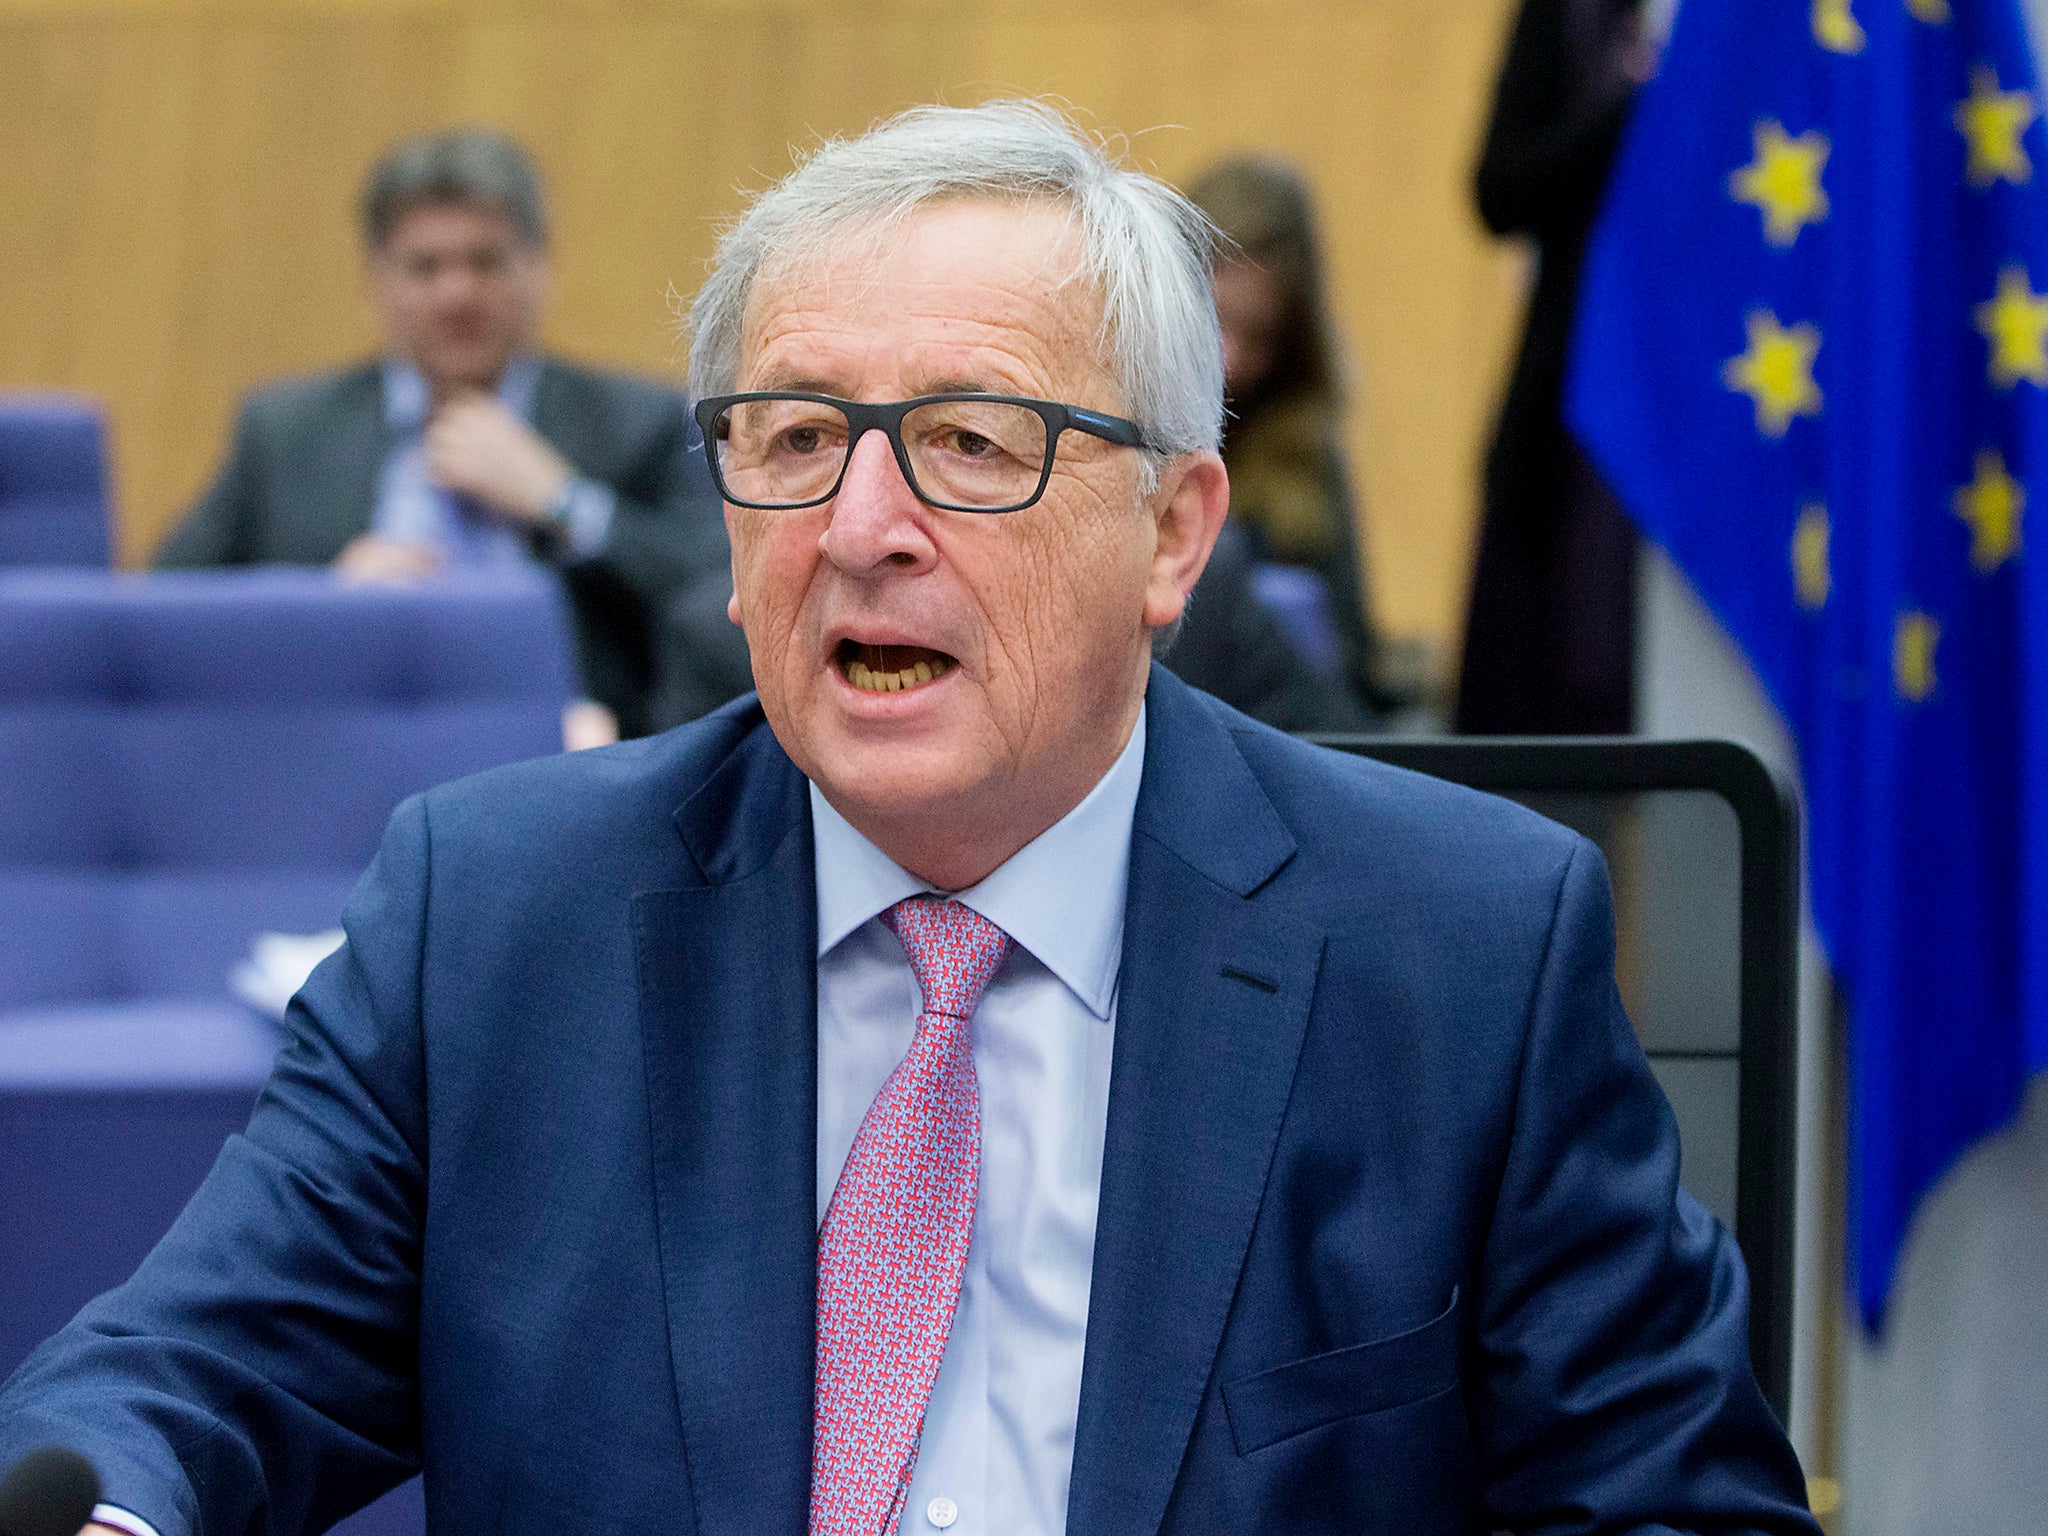 EU Commission President Jean-Claude Juncker